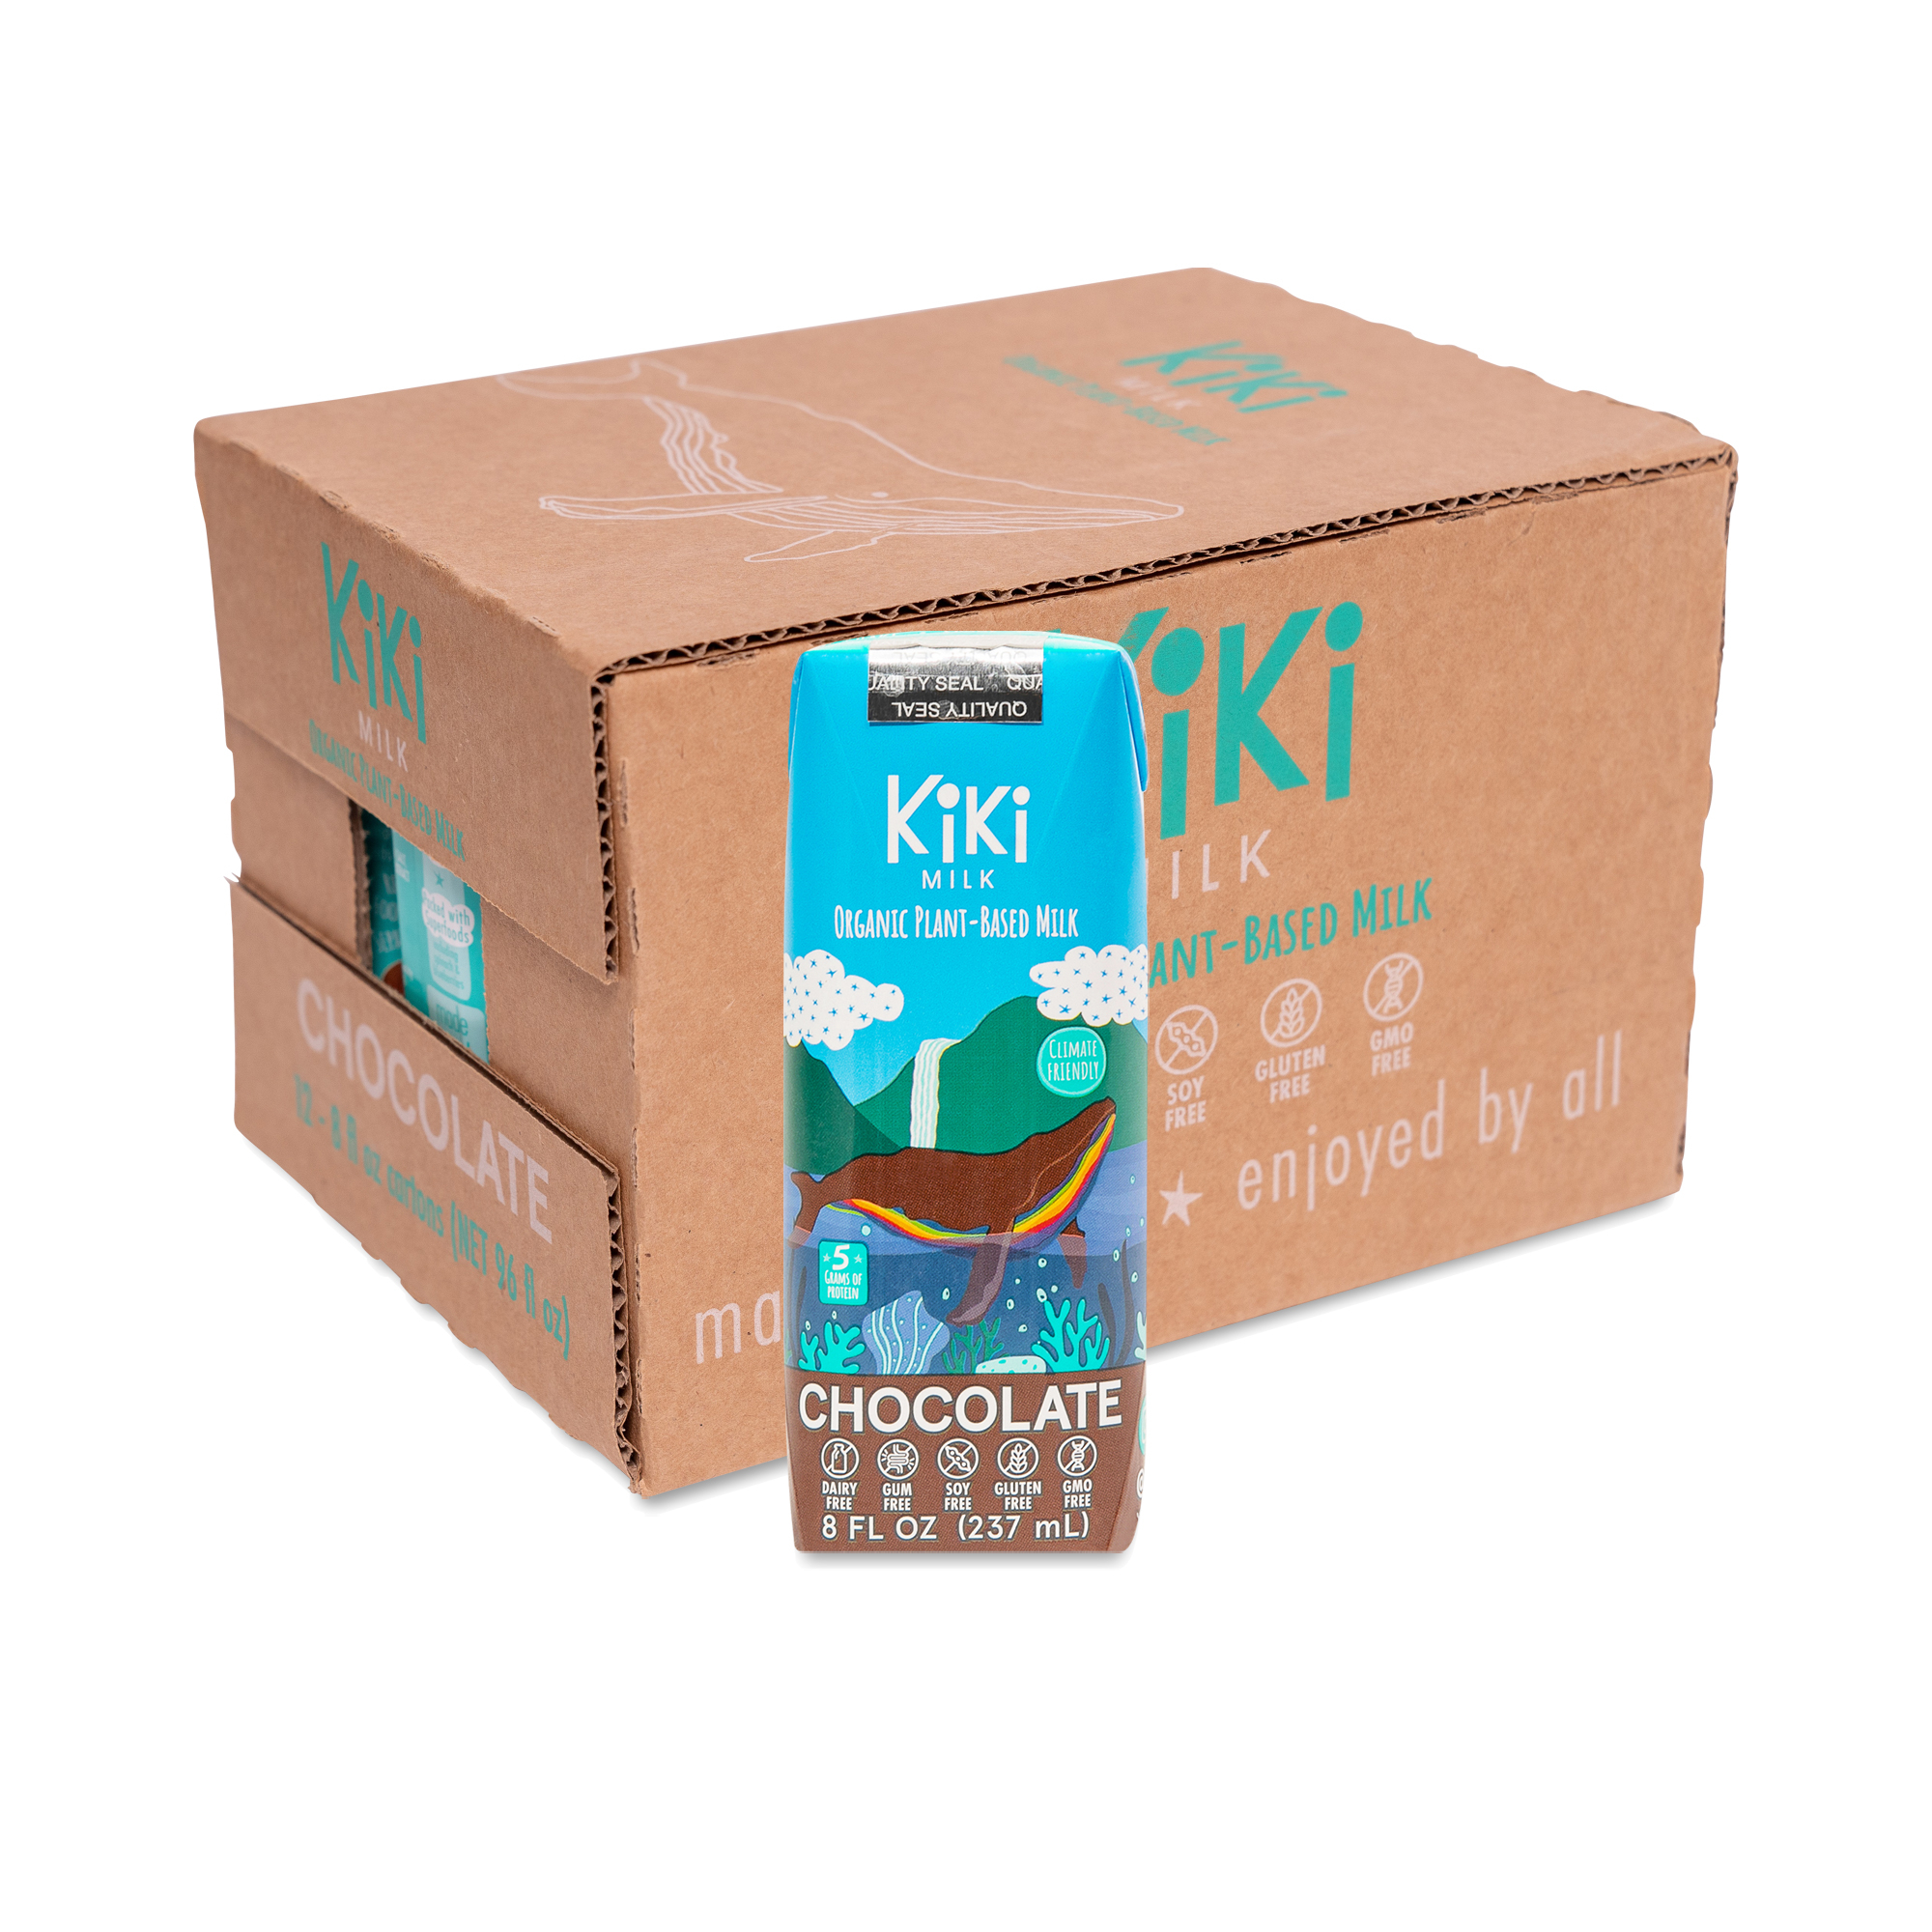 Kiki Milk Organic Plant-Based Milk, Chocolate 12 cartons